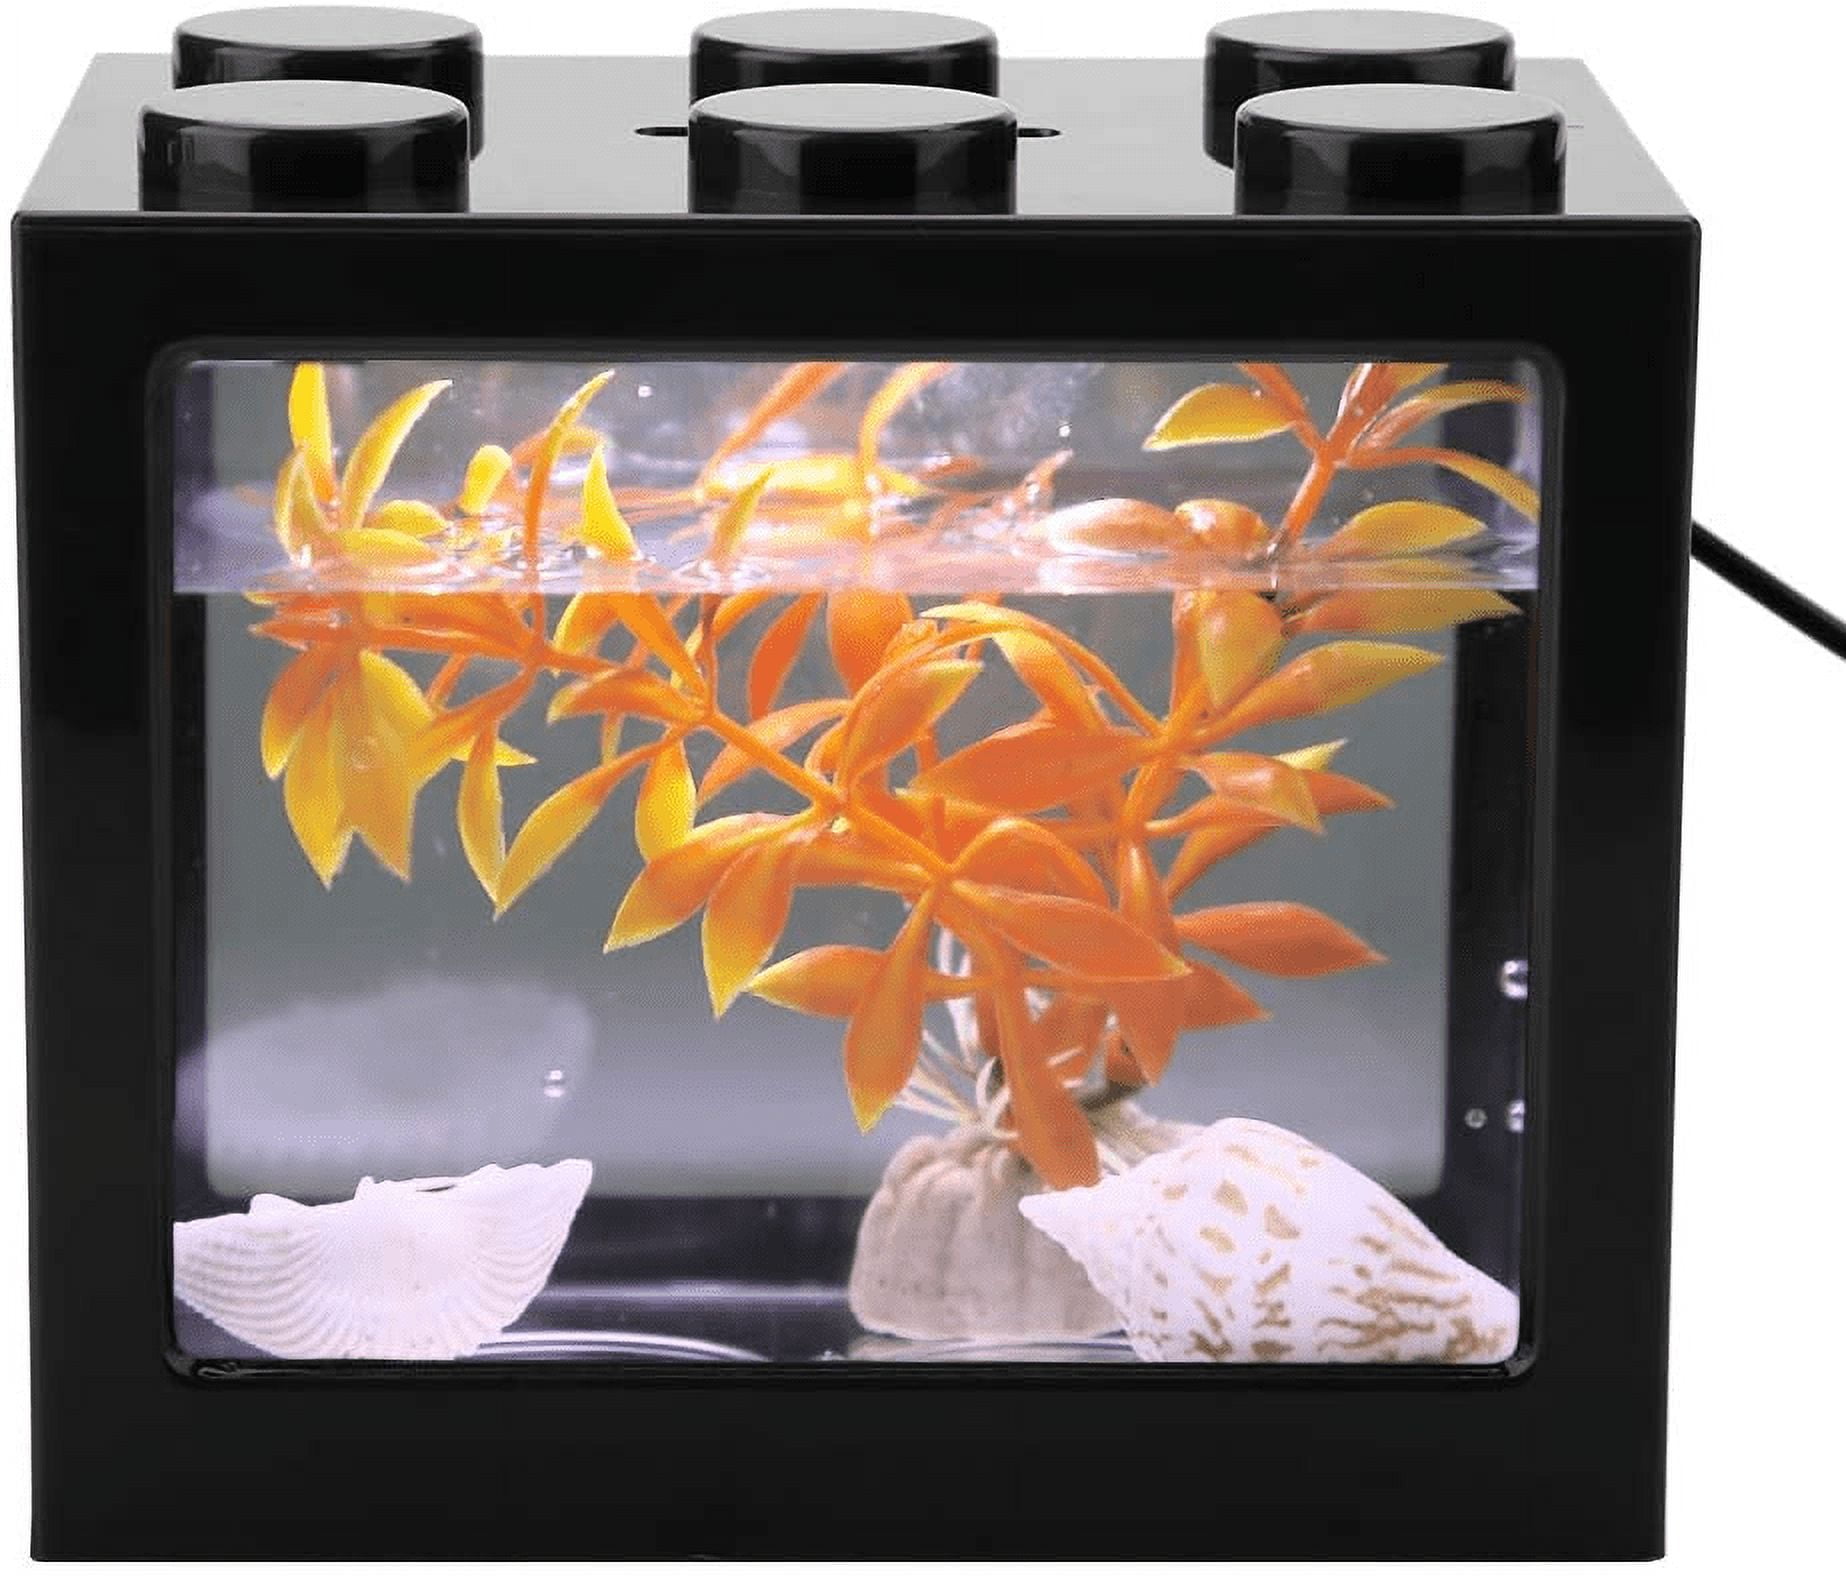 Small Betta Fish Tank,Snowy Mountain Aquarium Tank Kit with LED Lighting  0.4 Gallon Beta Fish Tank Set,Fish Bowl Accessories (Fish Tank)